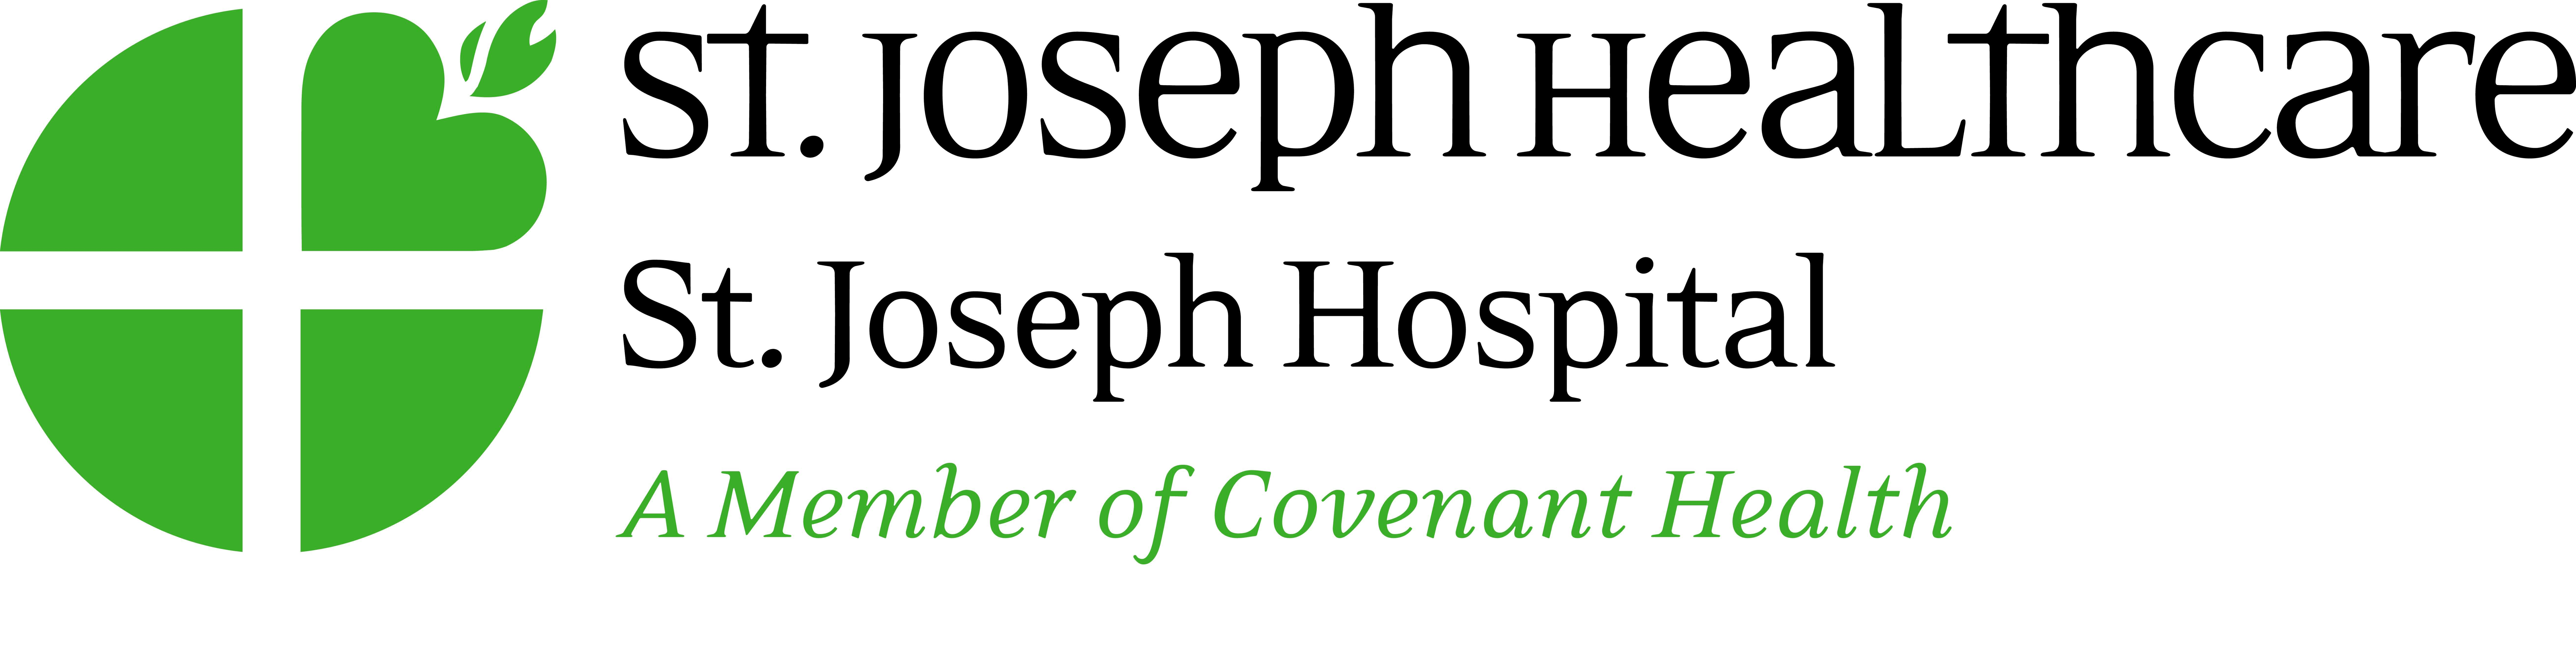 St. Joseph Healthcare